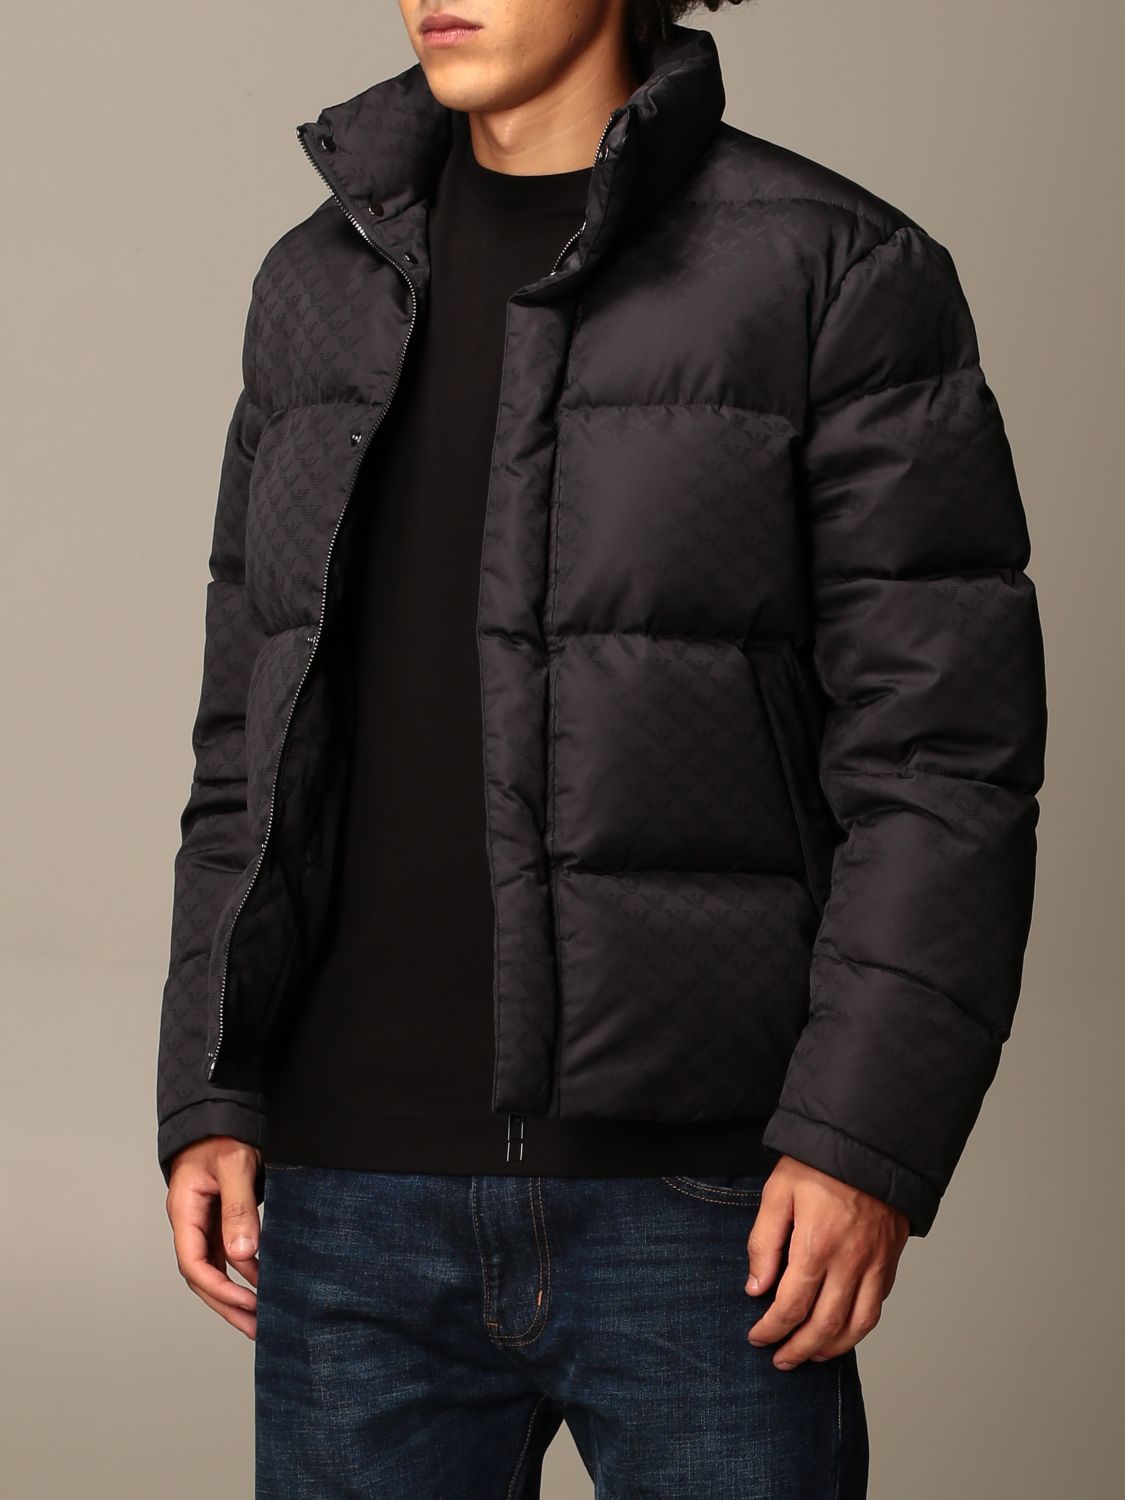 Emporio Armani nylon down jacket with all over logo | Jacket Emporio ...